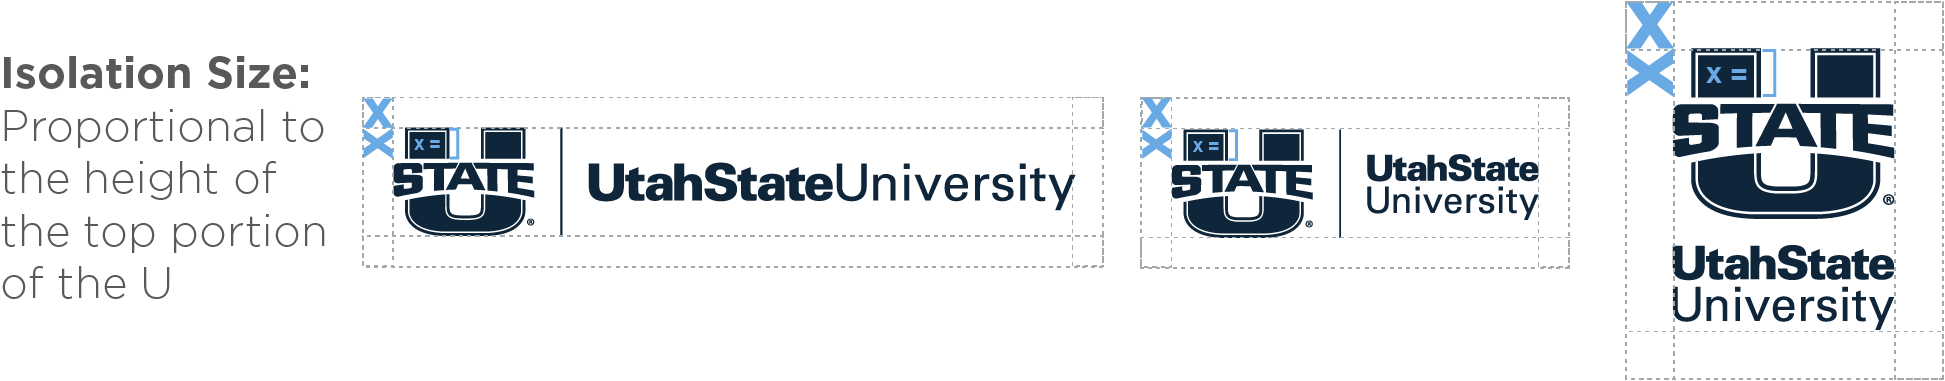 University Logos Area of Isolation 